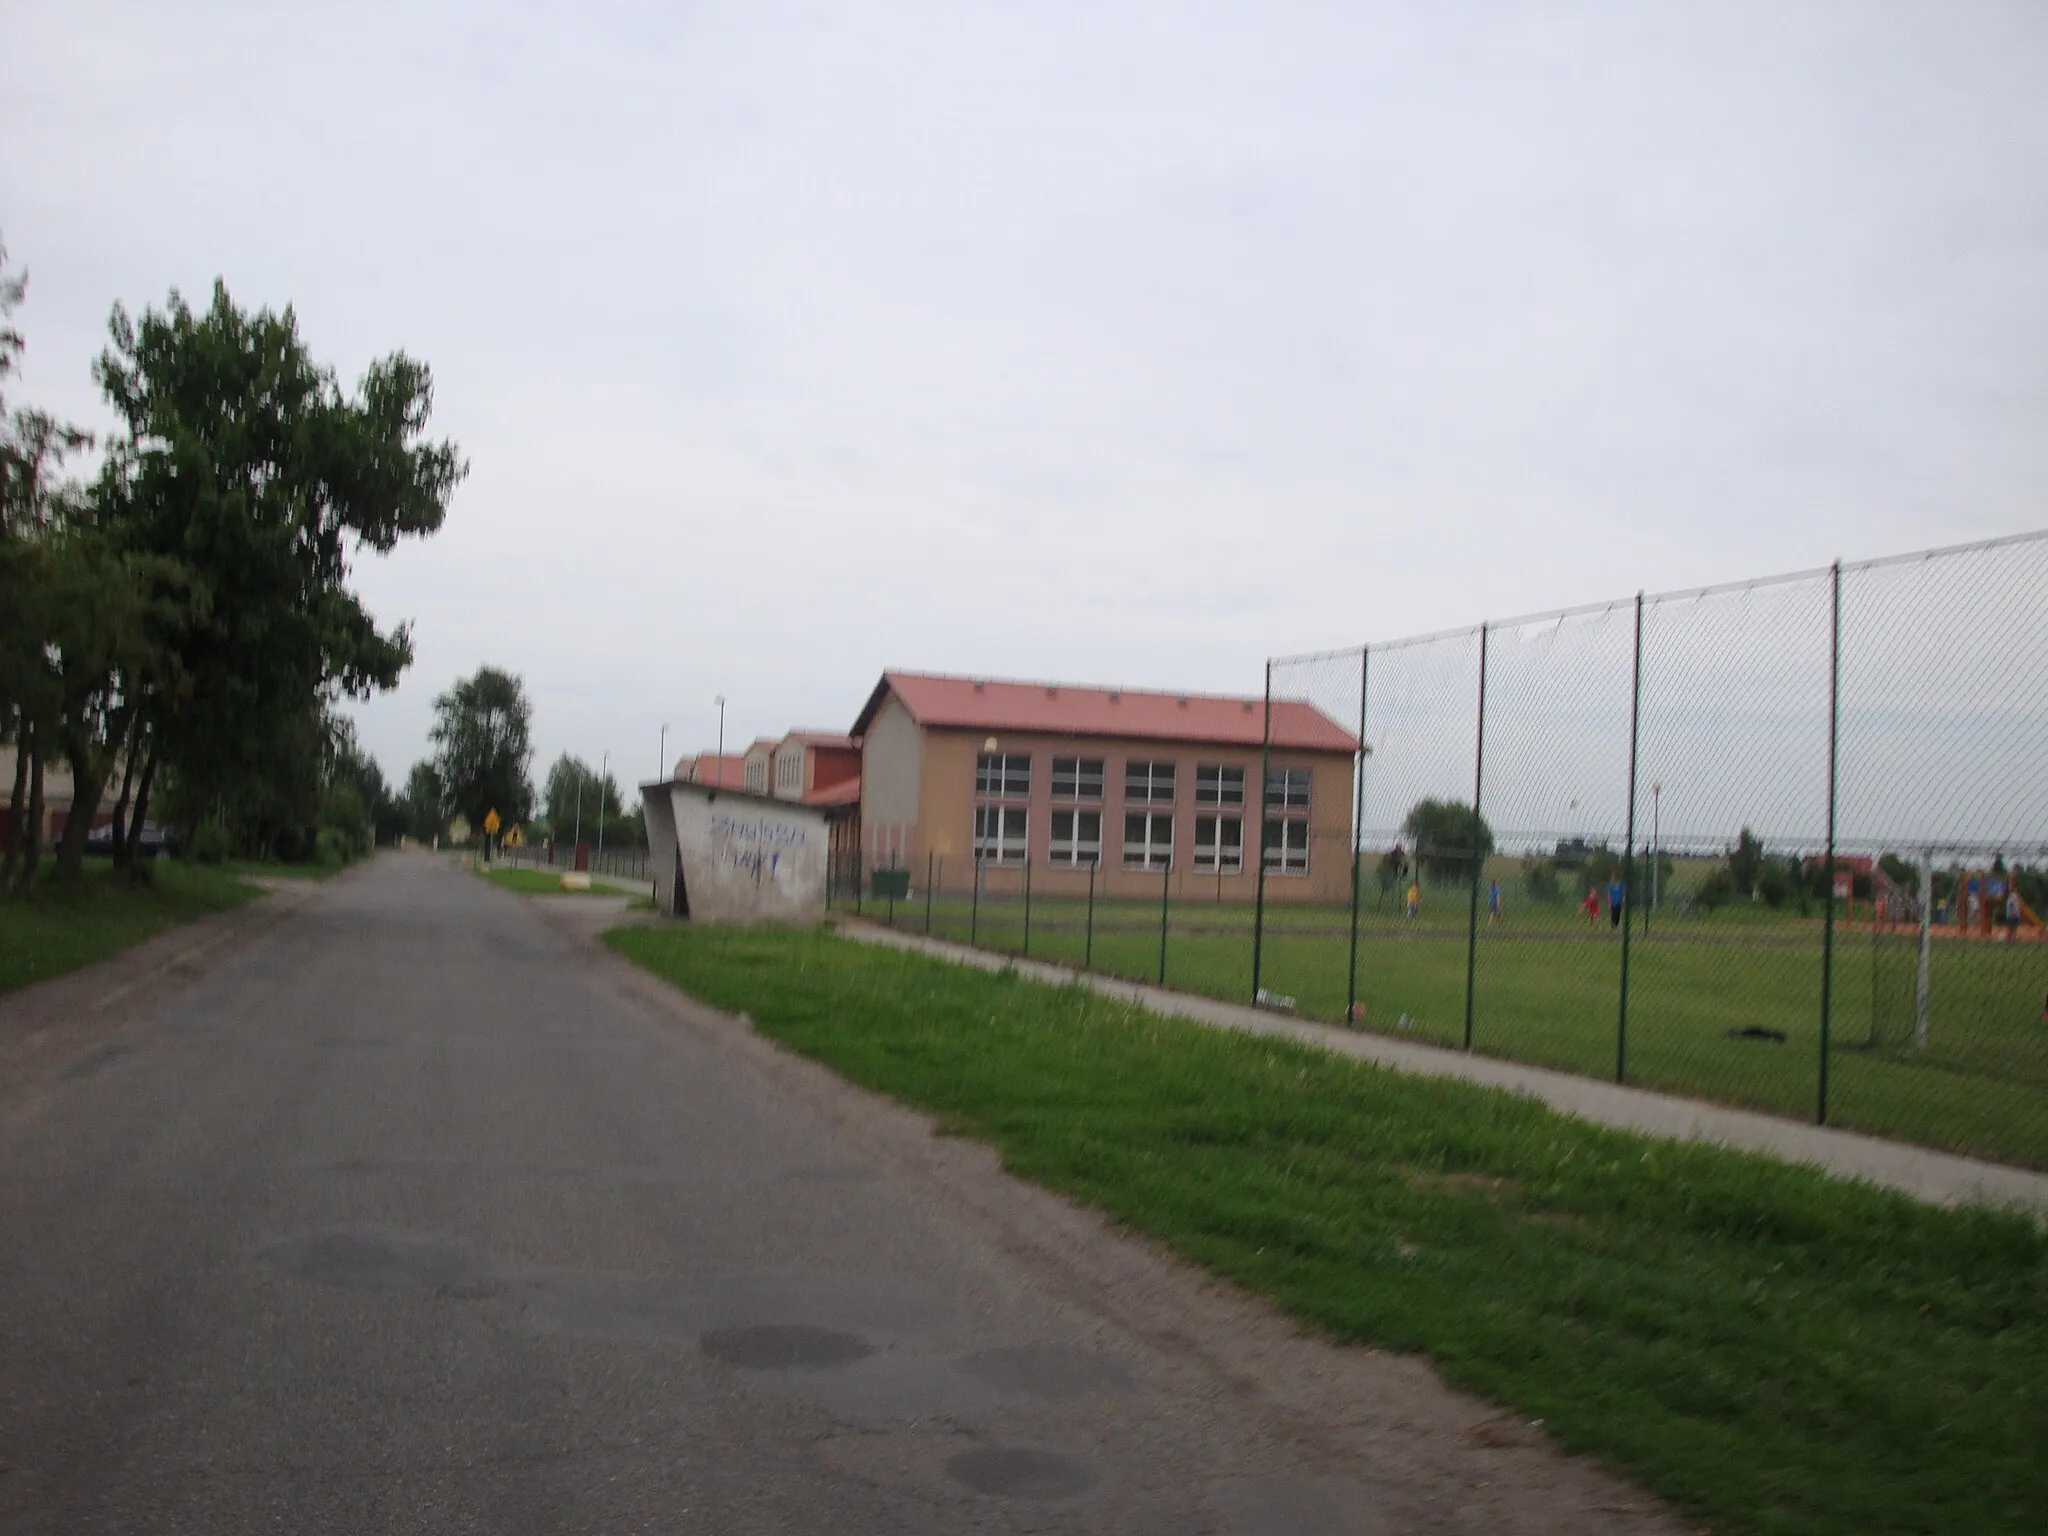 Photo showing: Krąplewice-village in Kuyavian-Pomeranian Voivodeship, Poland. School and playground.